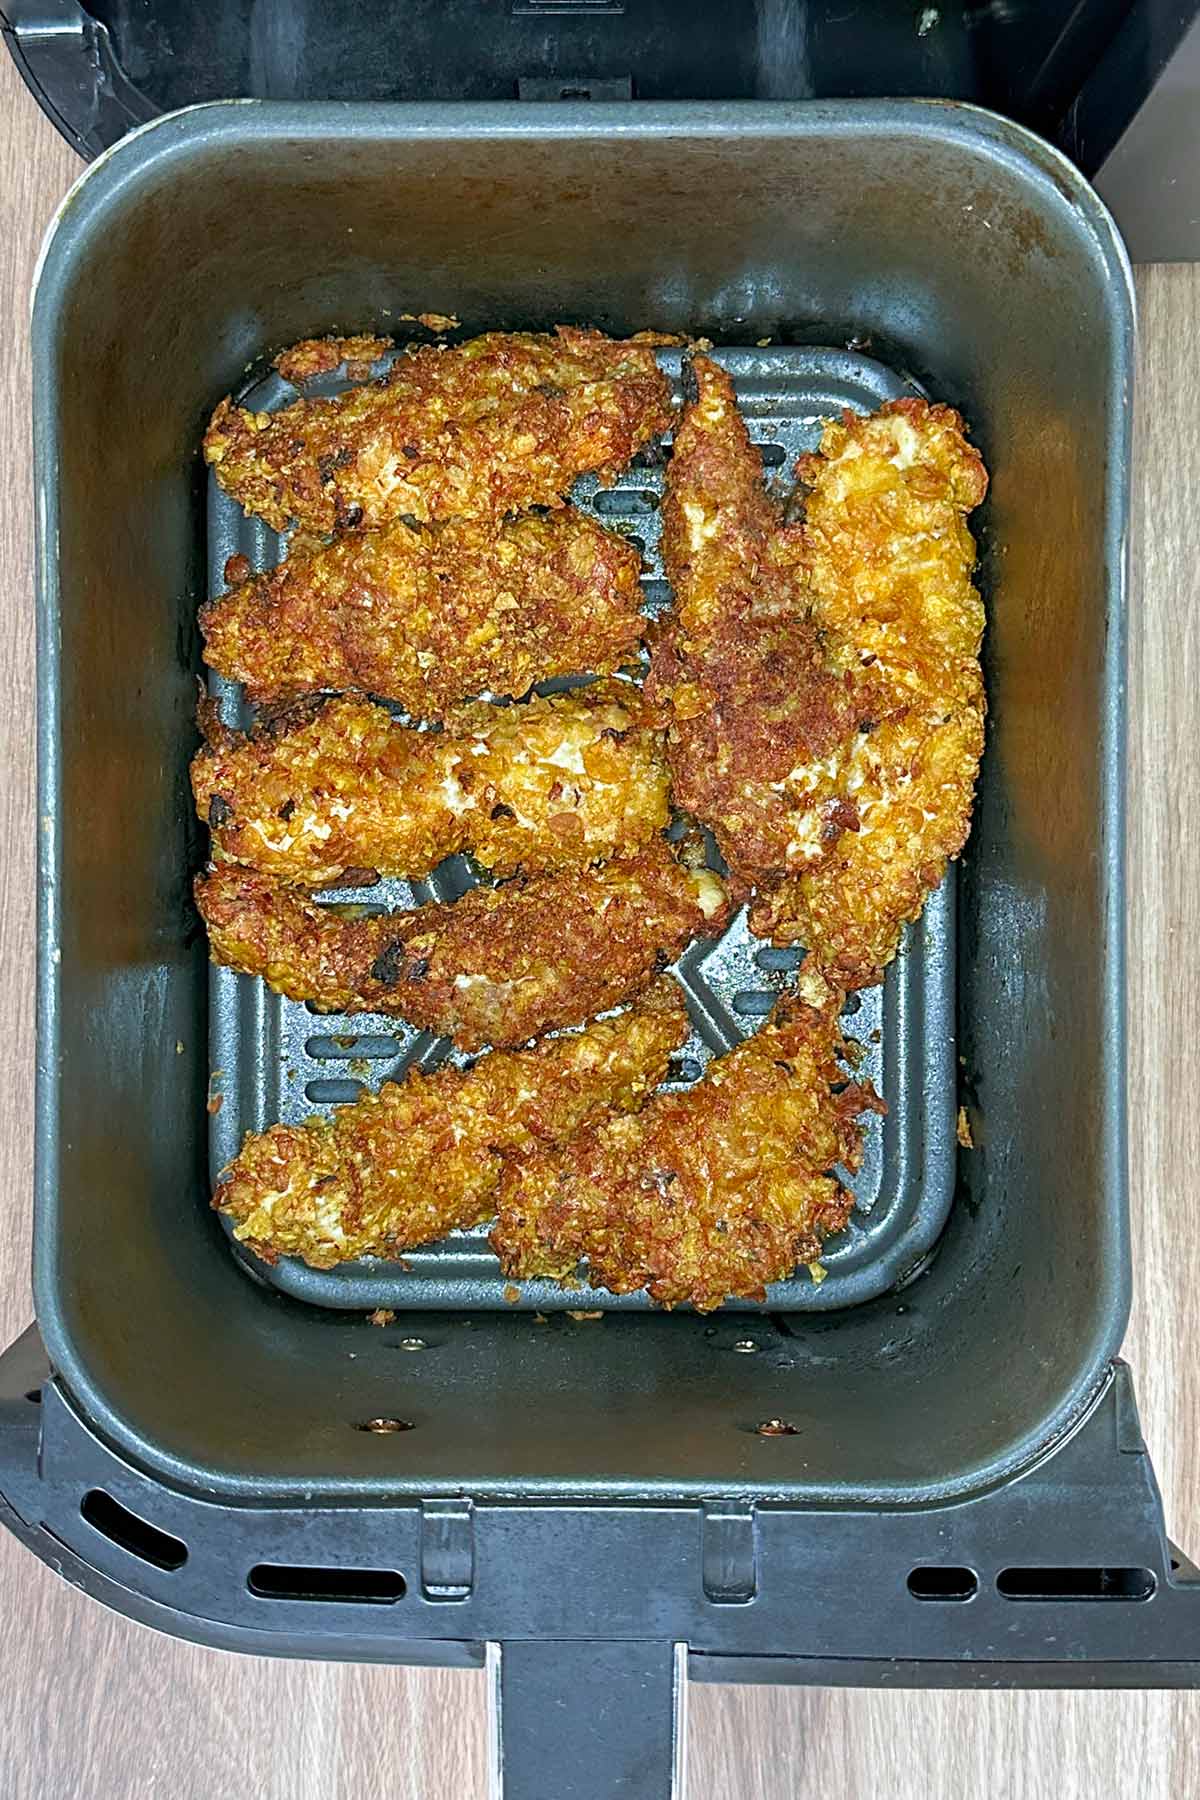 Cooked chicken tenders in an air fryer basket.